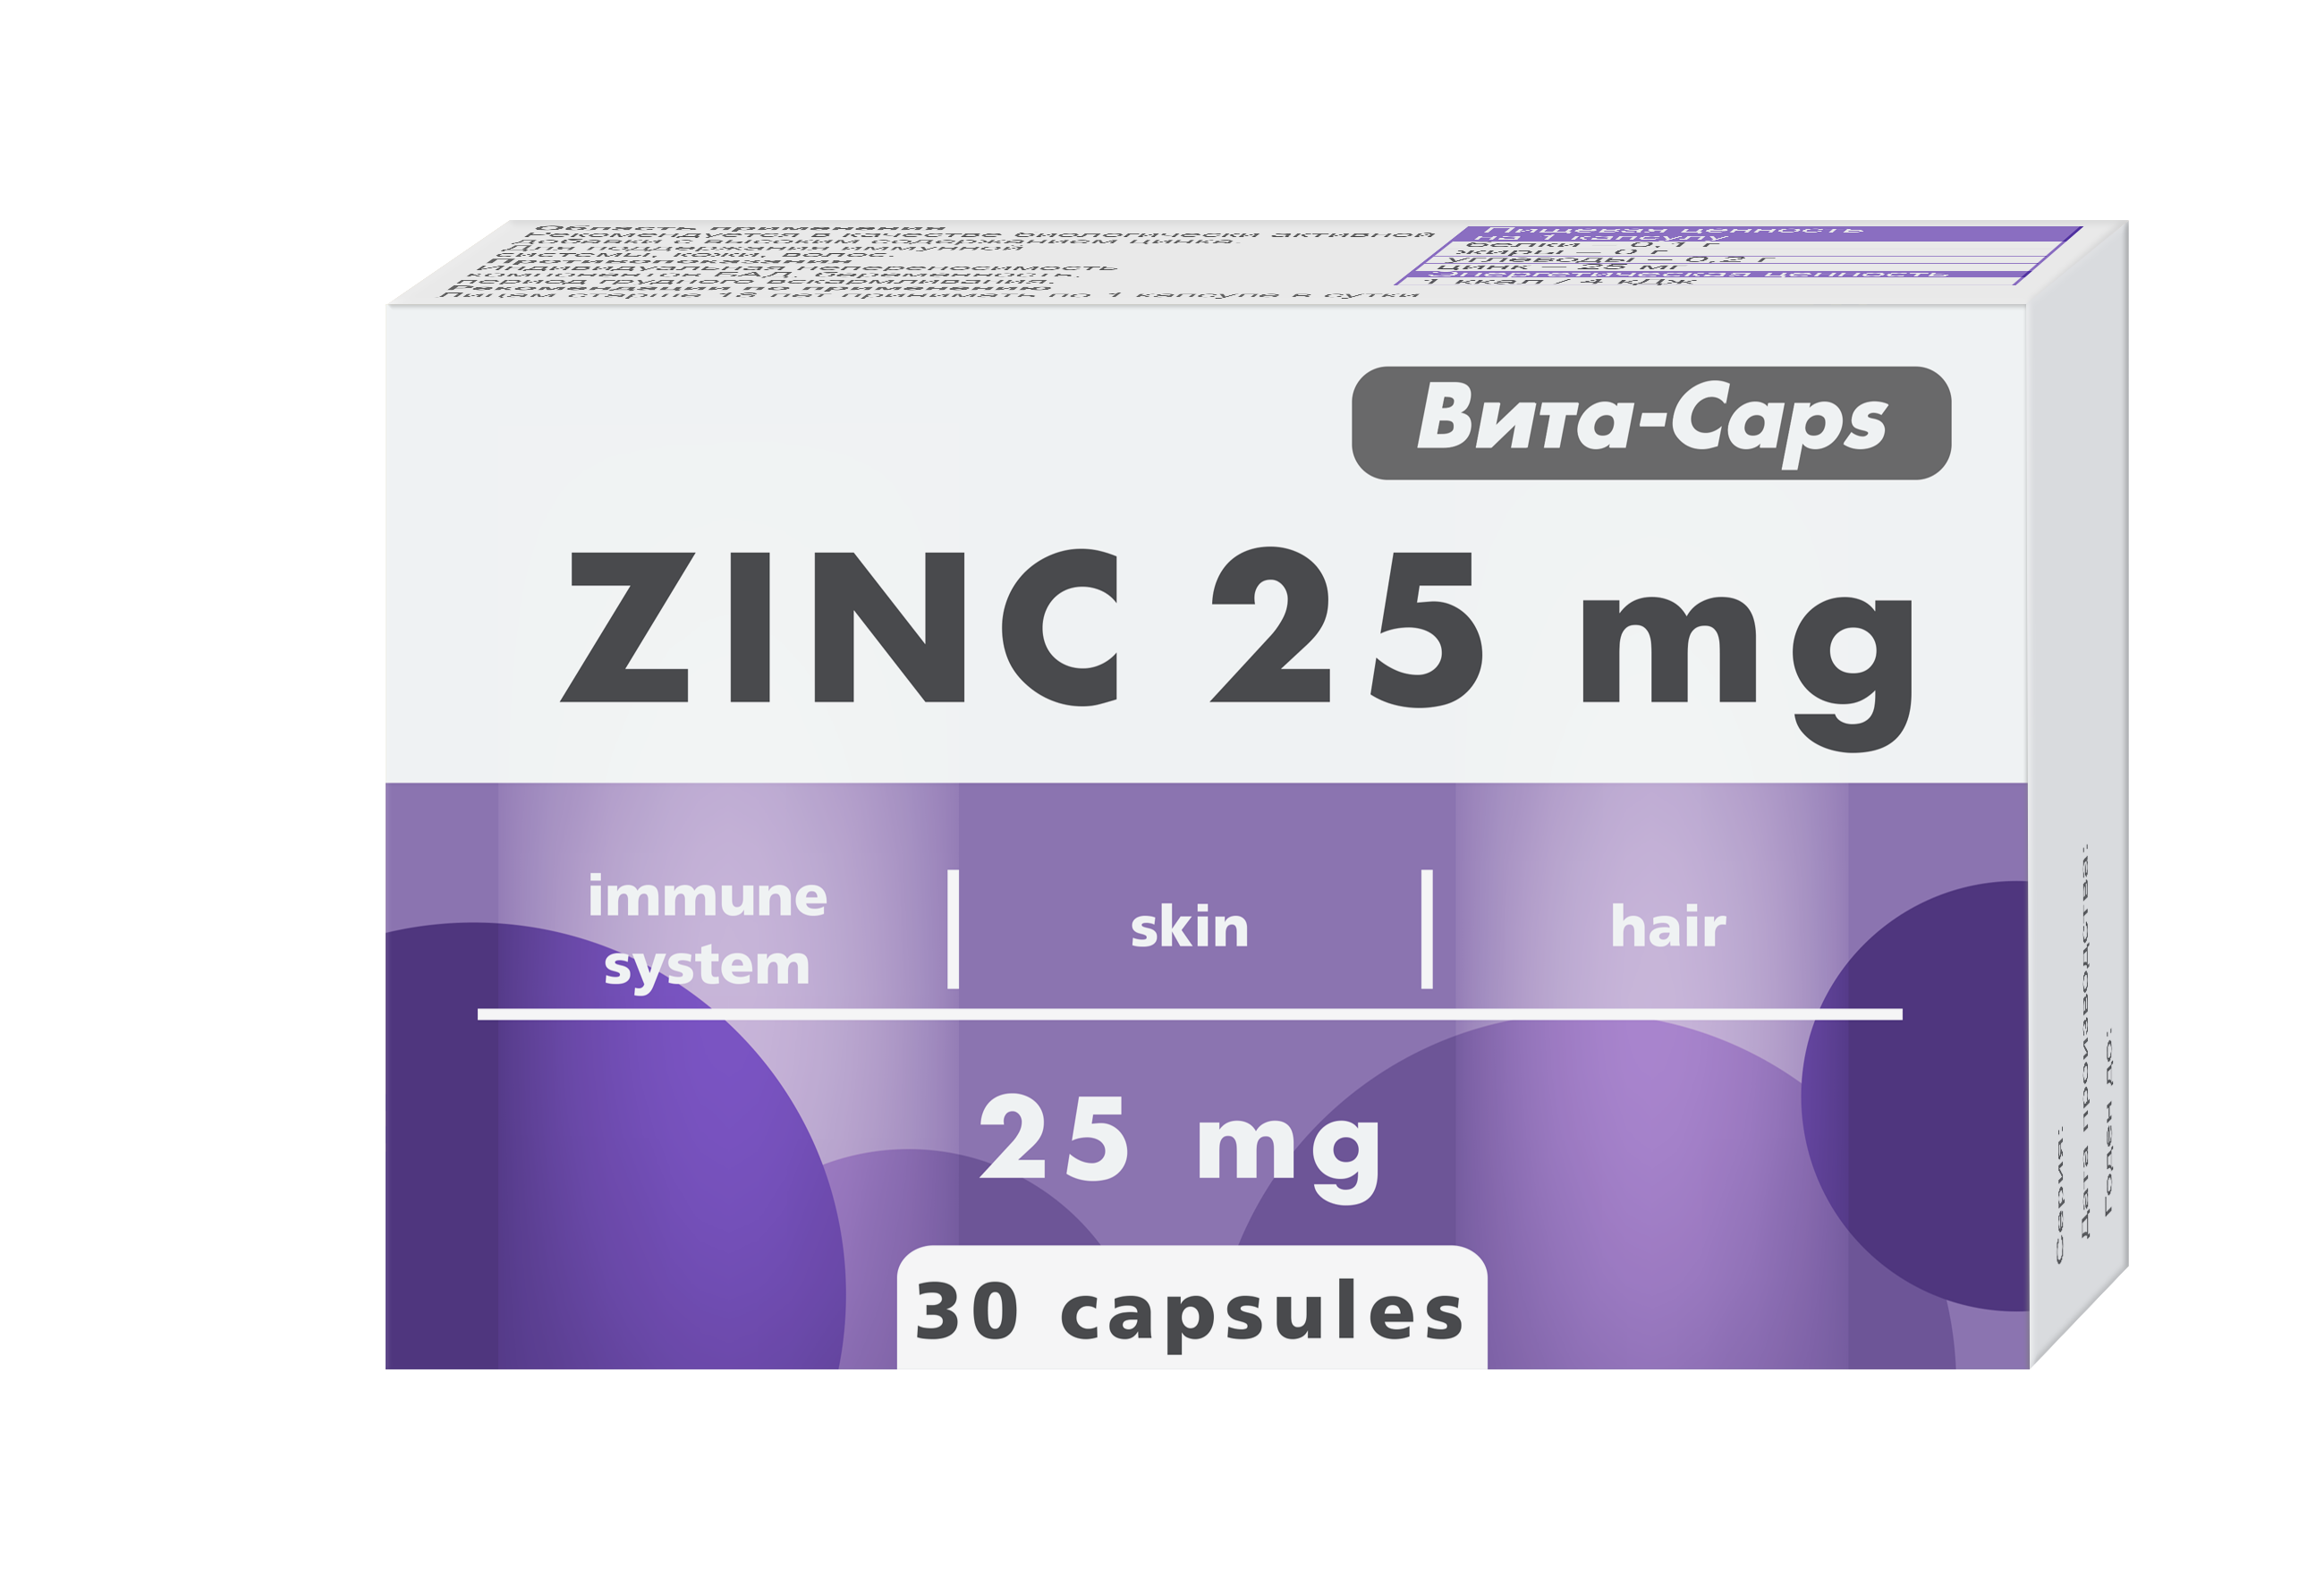 Vita-CAPS Zink, 25 mg is a new product in portfolio of Minskintercaps